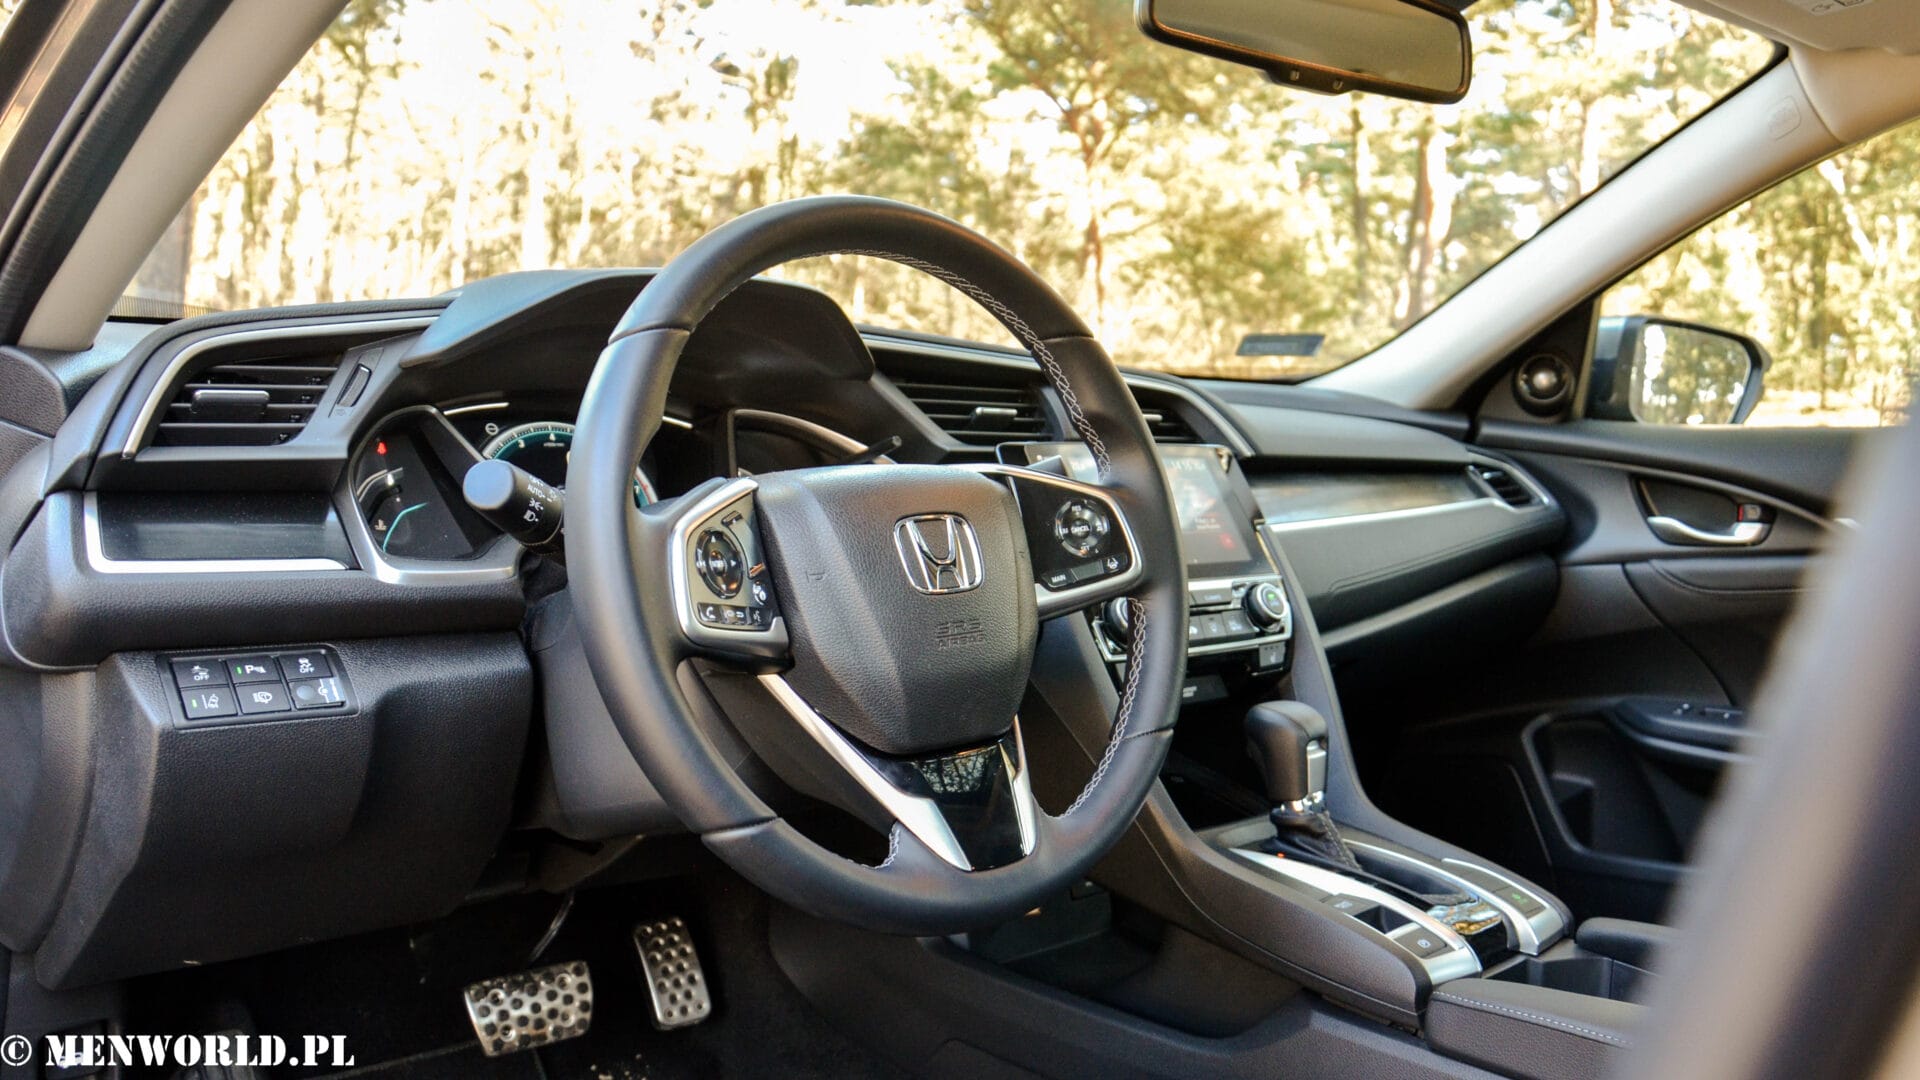 Honda Civic 4d sedan [TEST] - mniejszy następca Accord'a